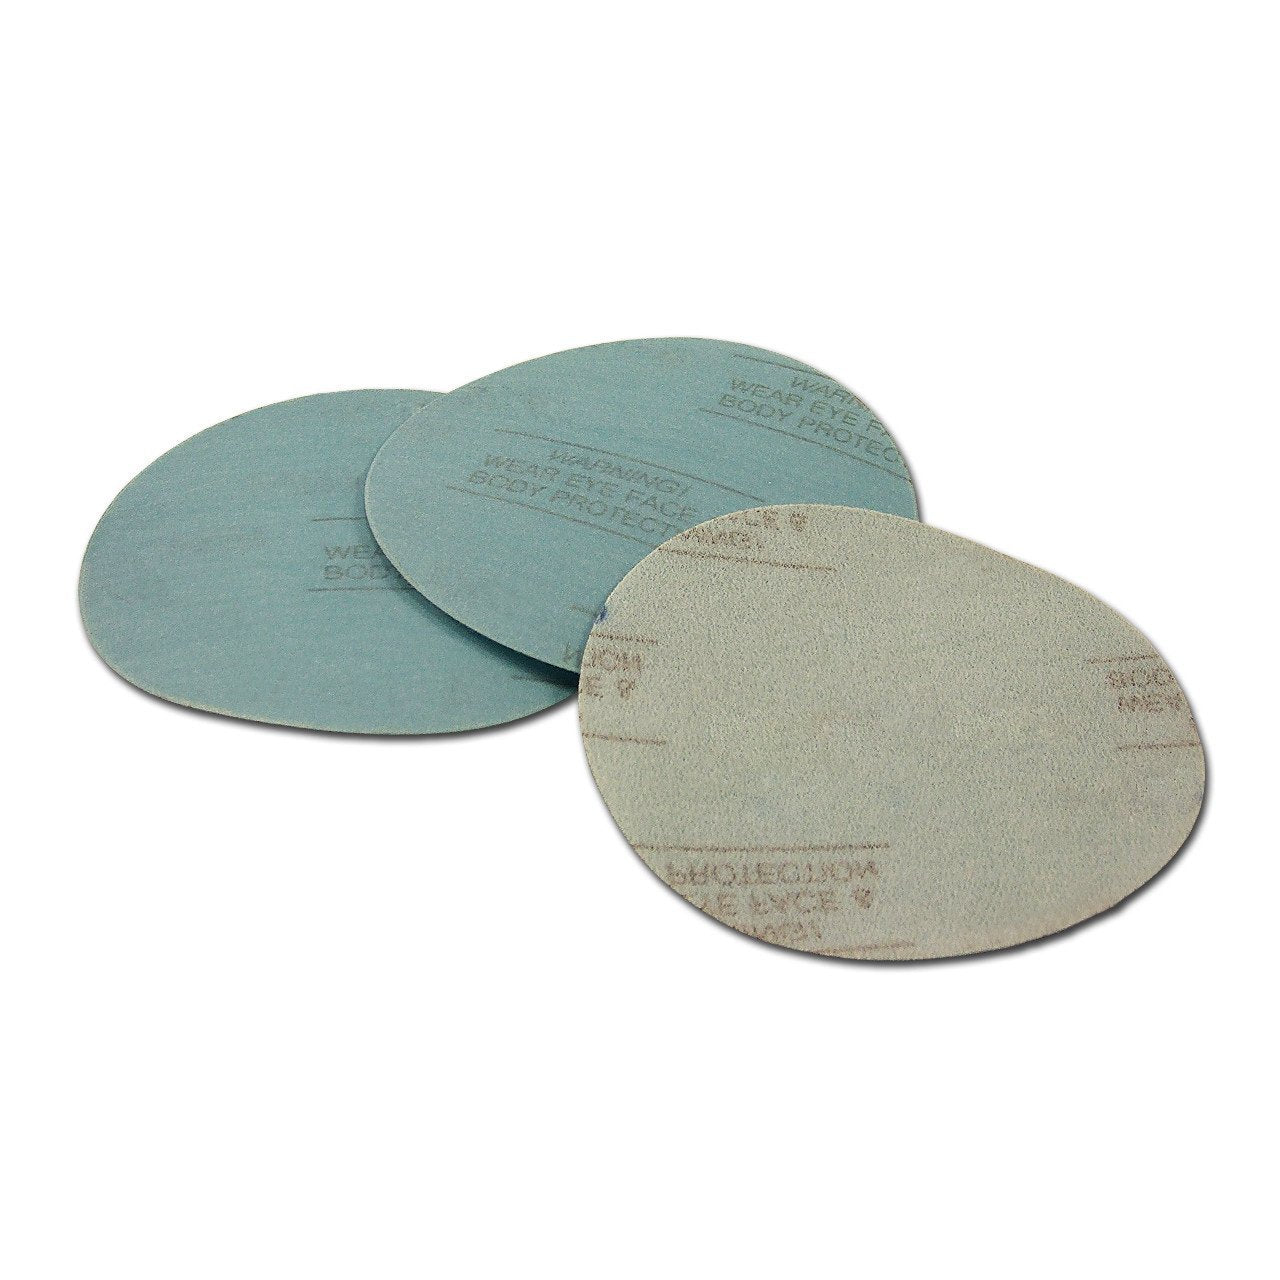 6 Inch Hook and Loop Blue Wet / Dry Sharpening Film Sanding Discs, 10 Pack - Red Label Abrasives